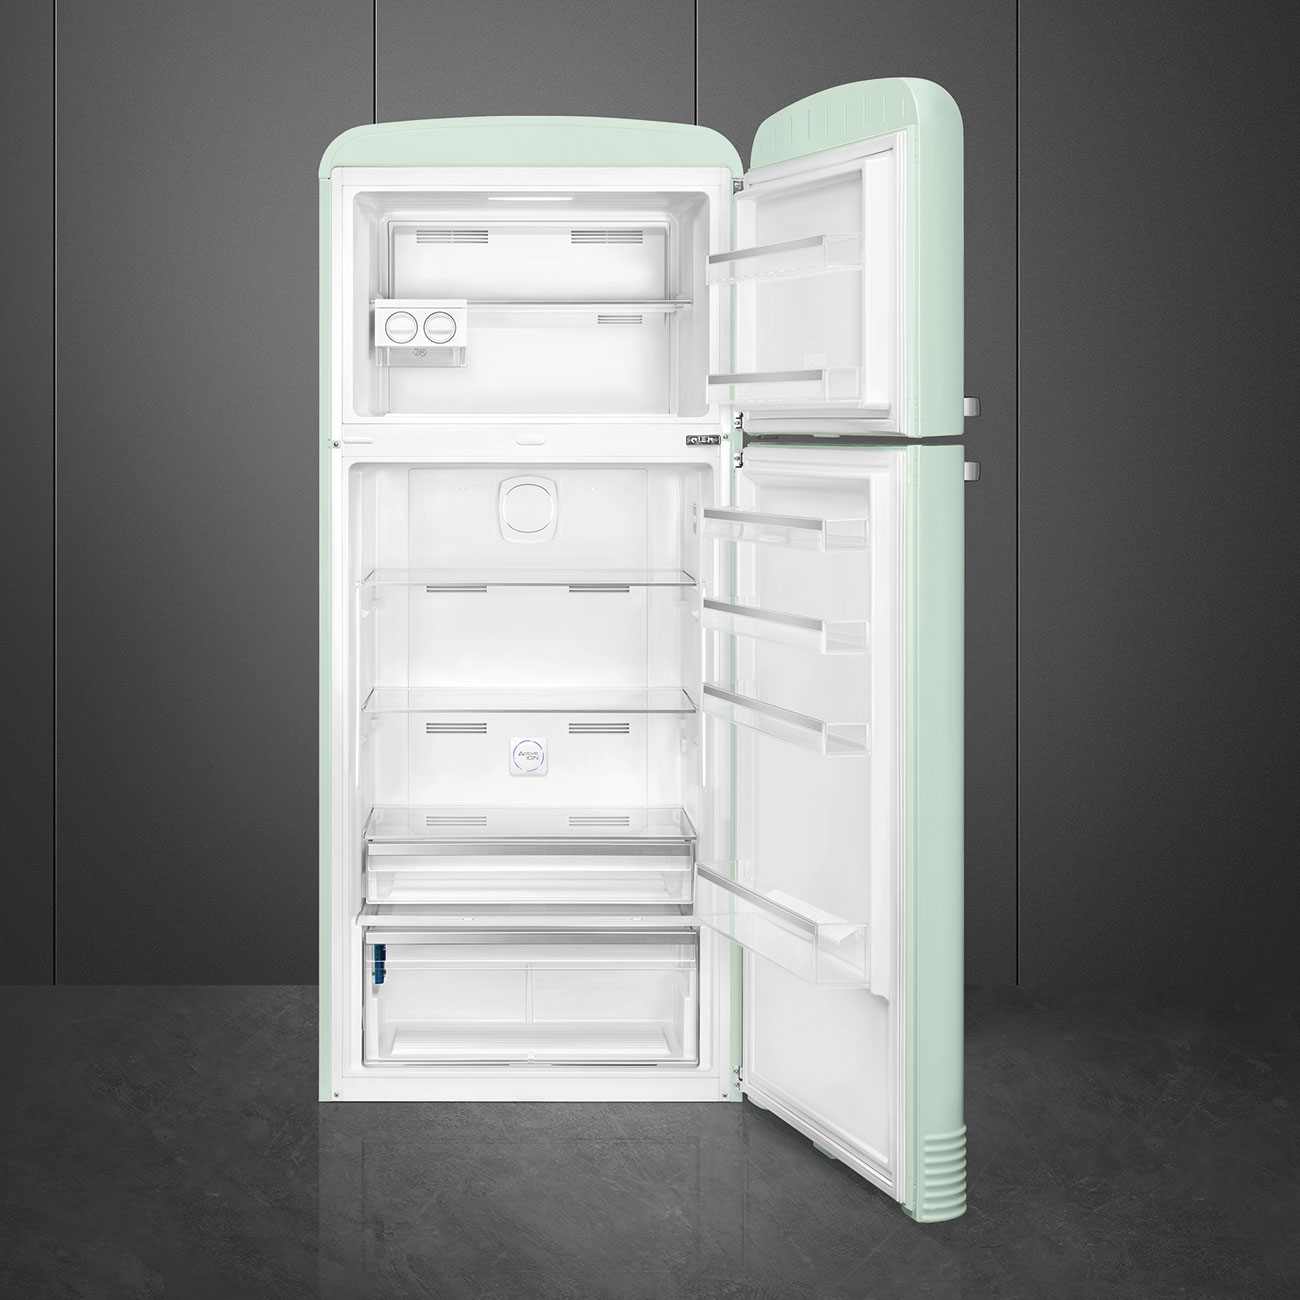 Pastel green refrigerator - Smeg_2